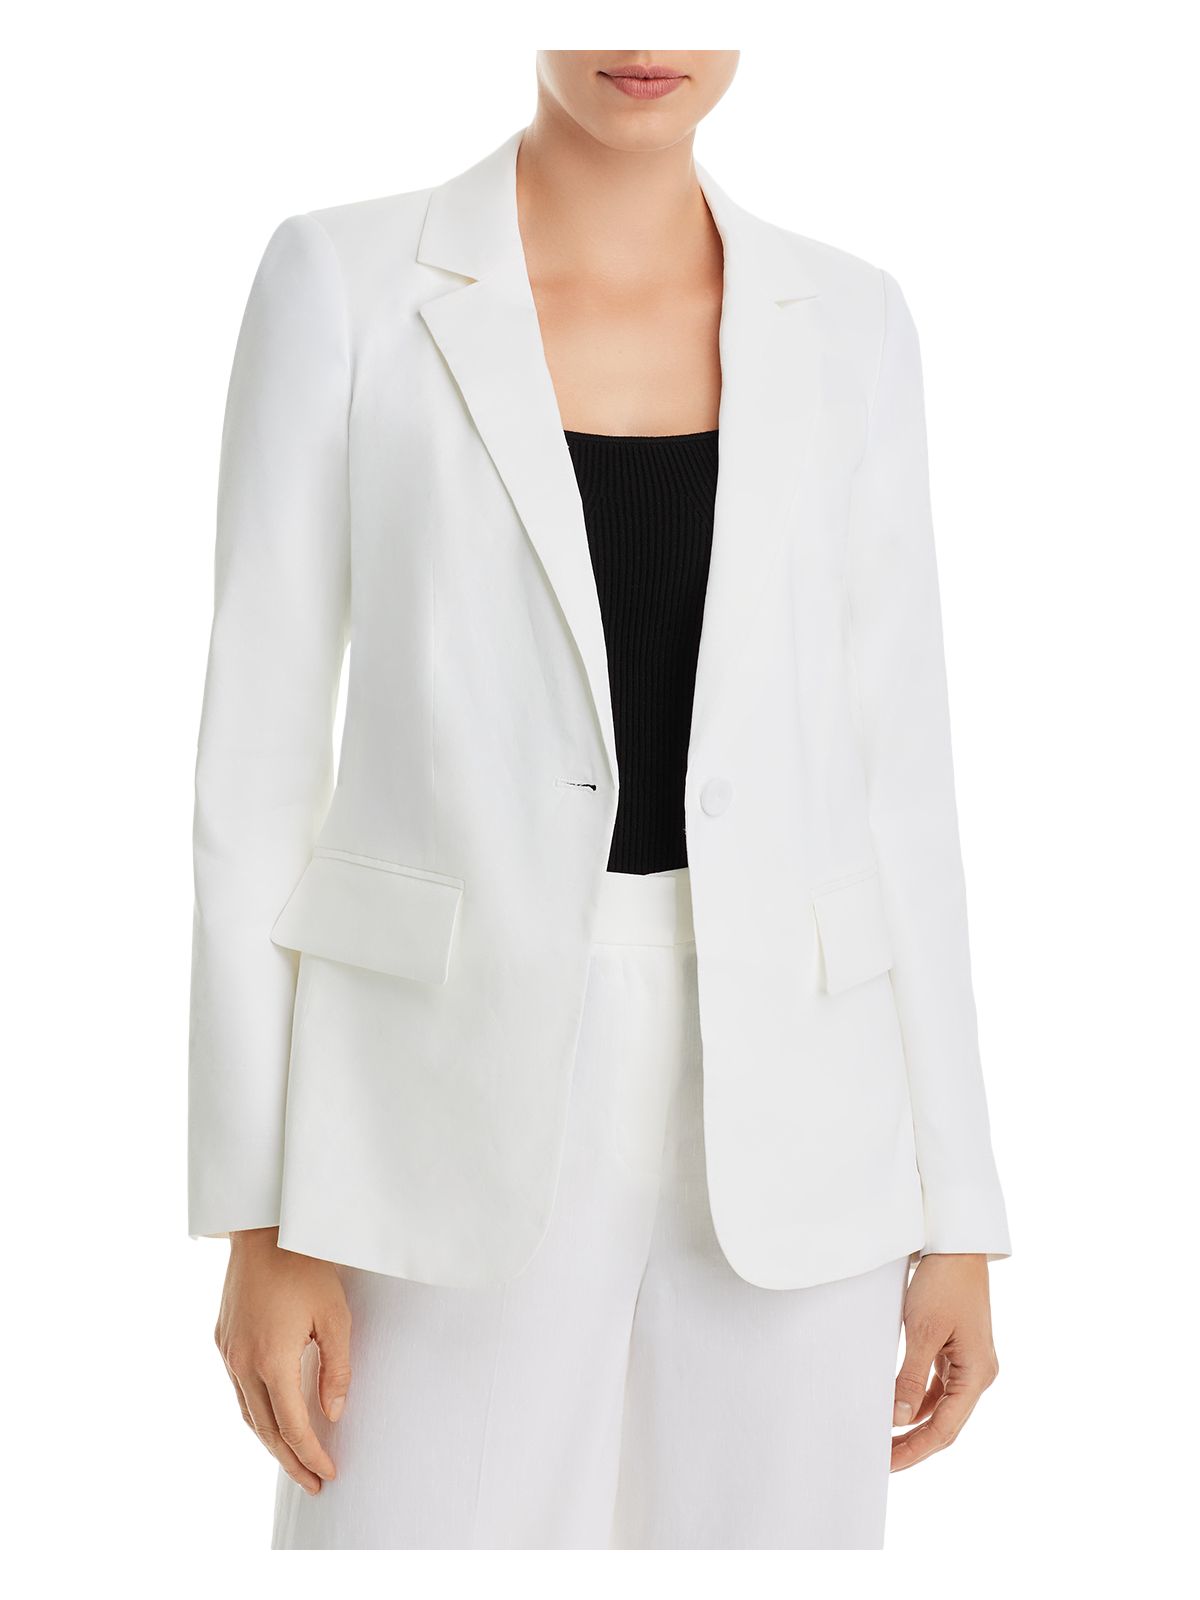 KOBI HALPERIN Womens Ivory Pocketed Front Lined Back Vent Wear To Work Blazer Jacket L